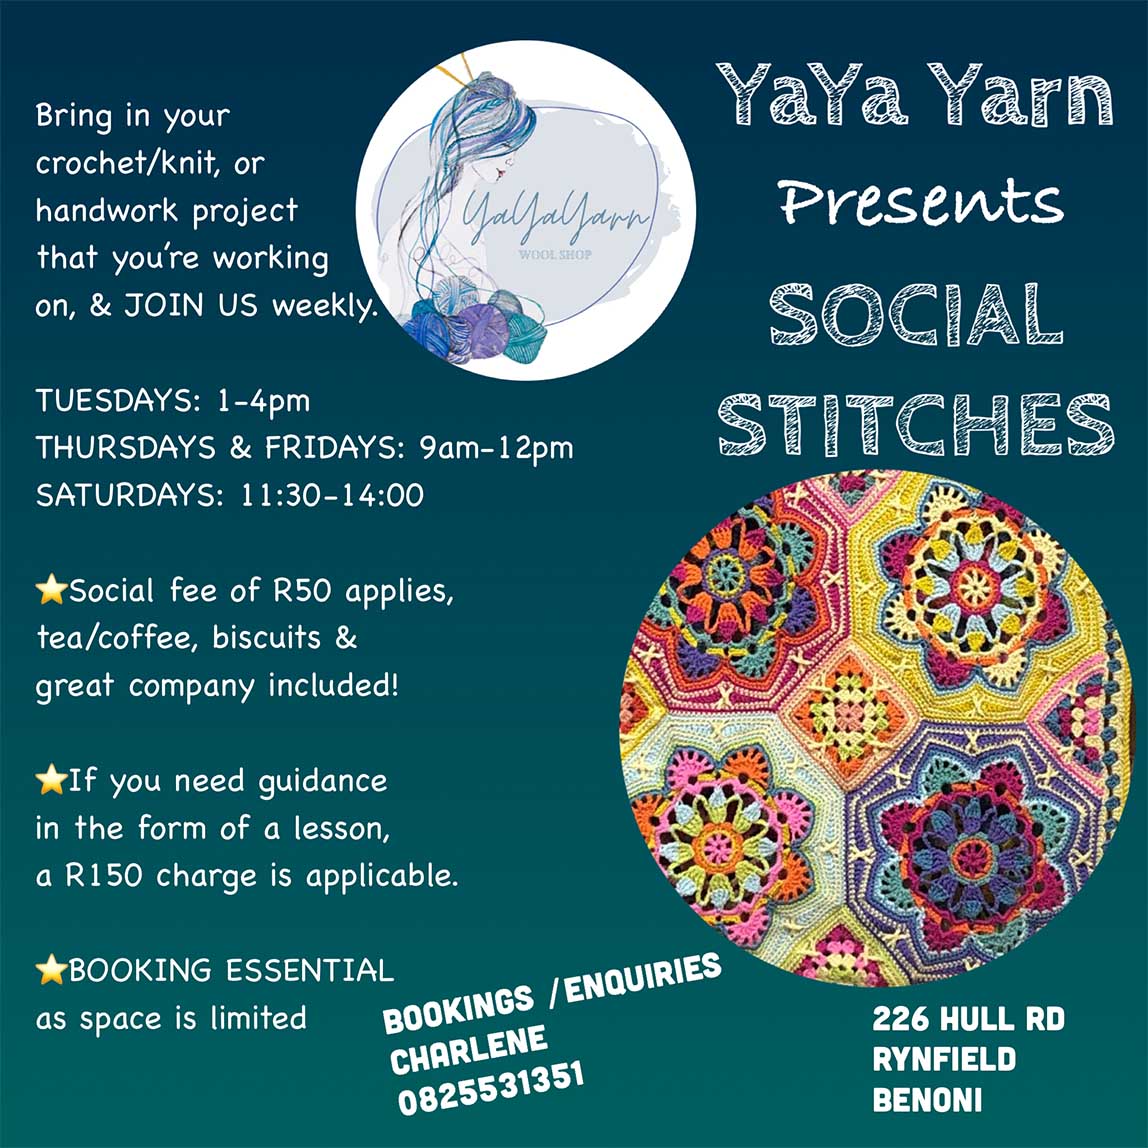 Yaya yarn social stitches